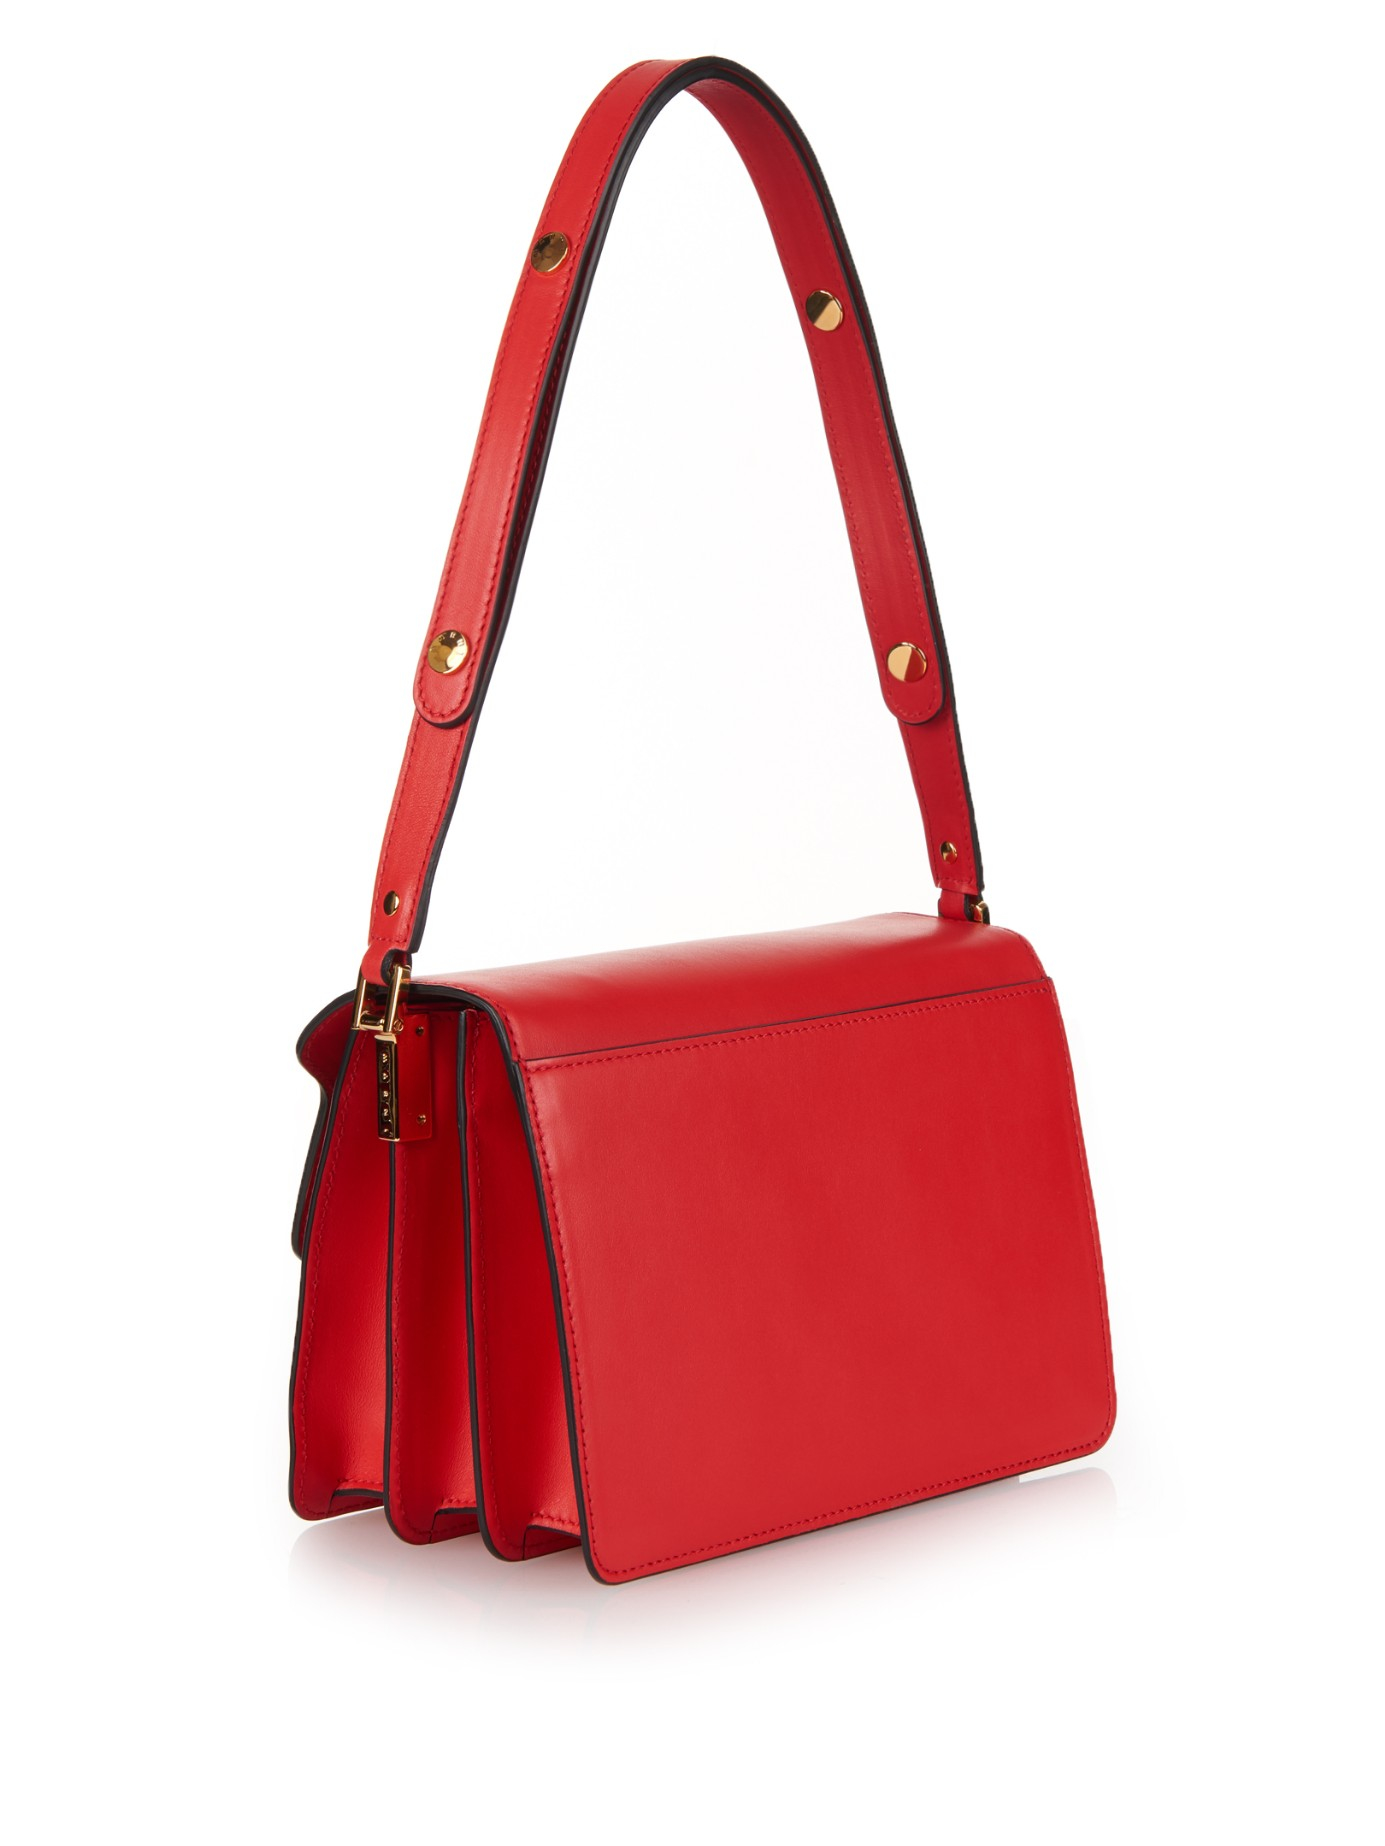 Marni Trunk Medium Leather Shoulder Bag in Red | Lyst